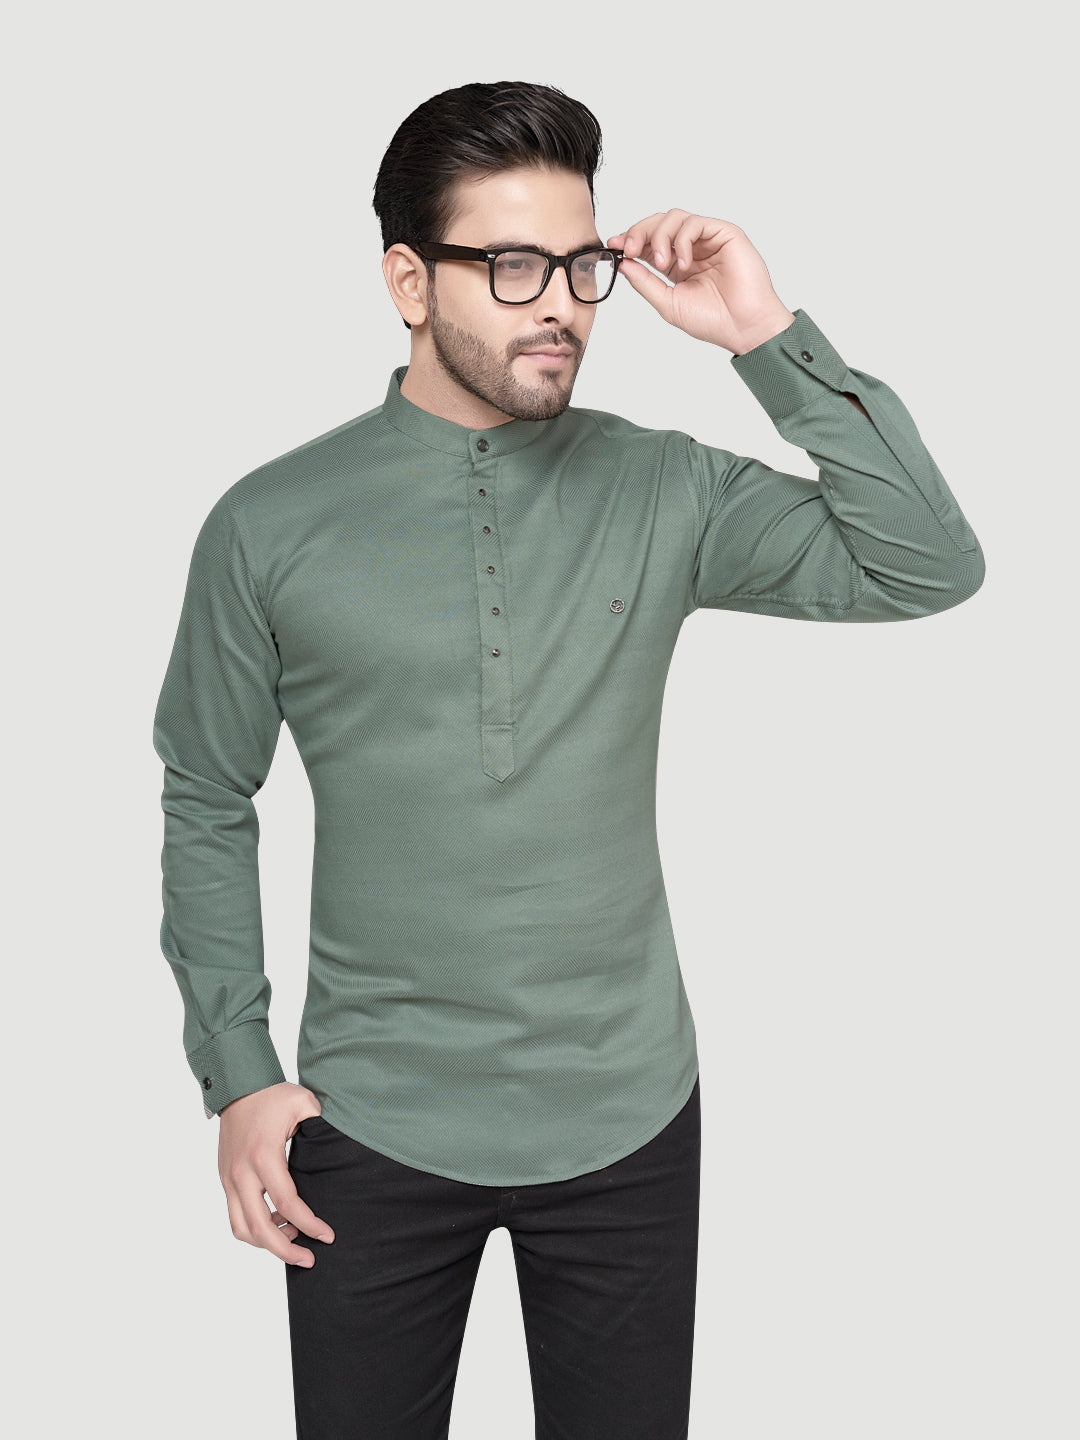 Black and White Shirts Men's Designer Short Kurta with Metal Buttons Teal Green